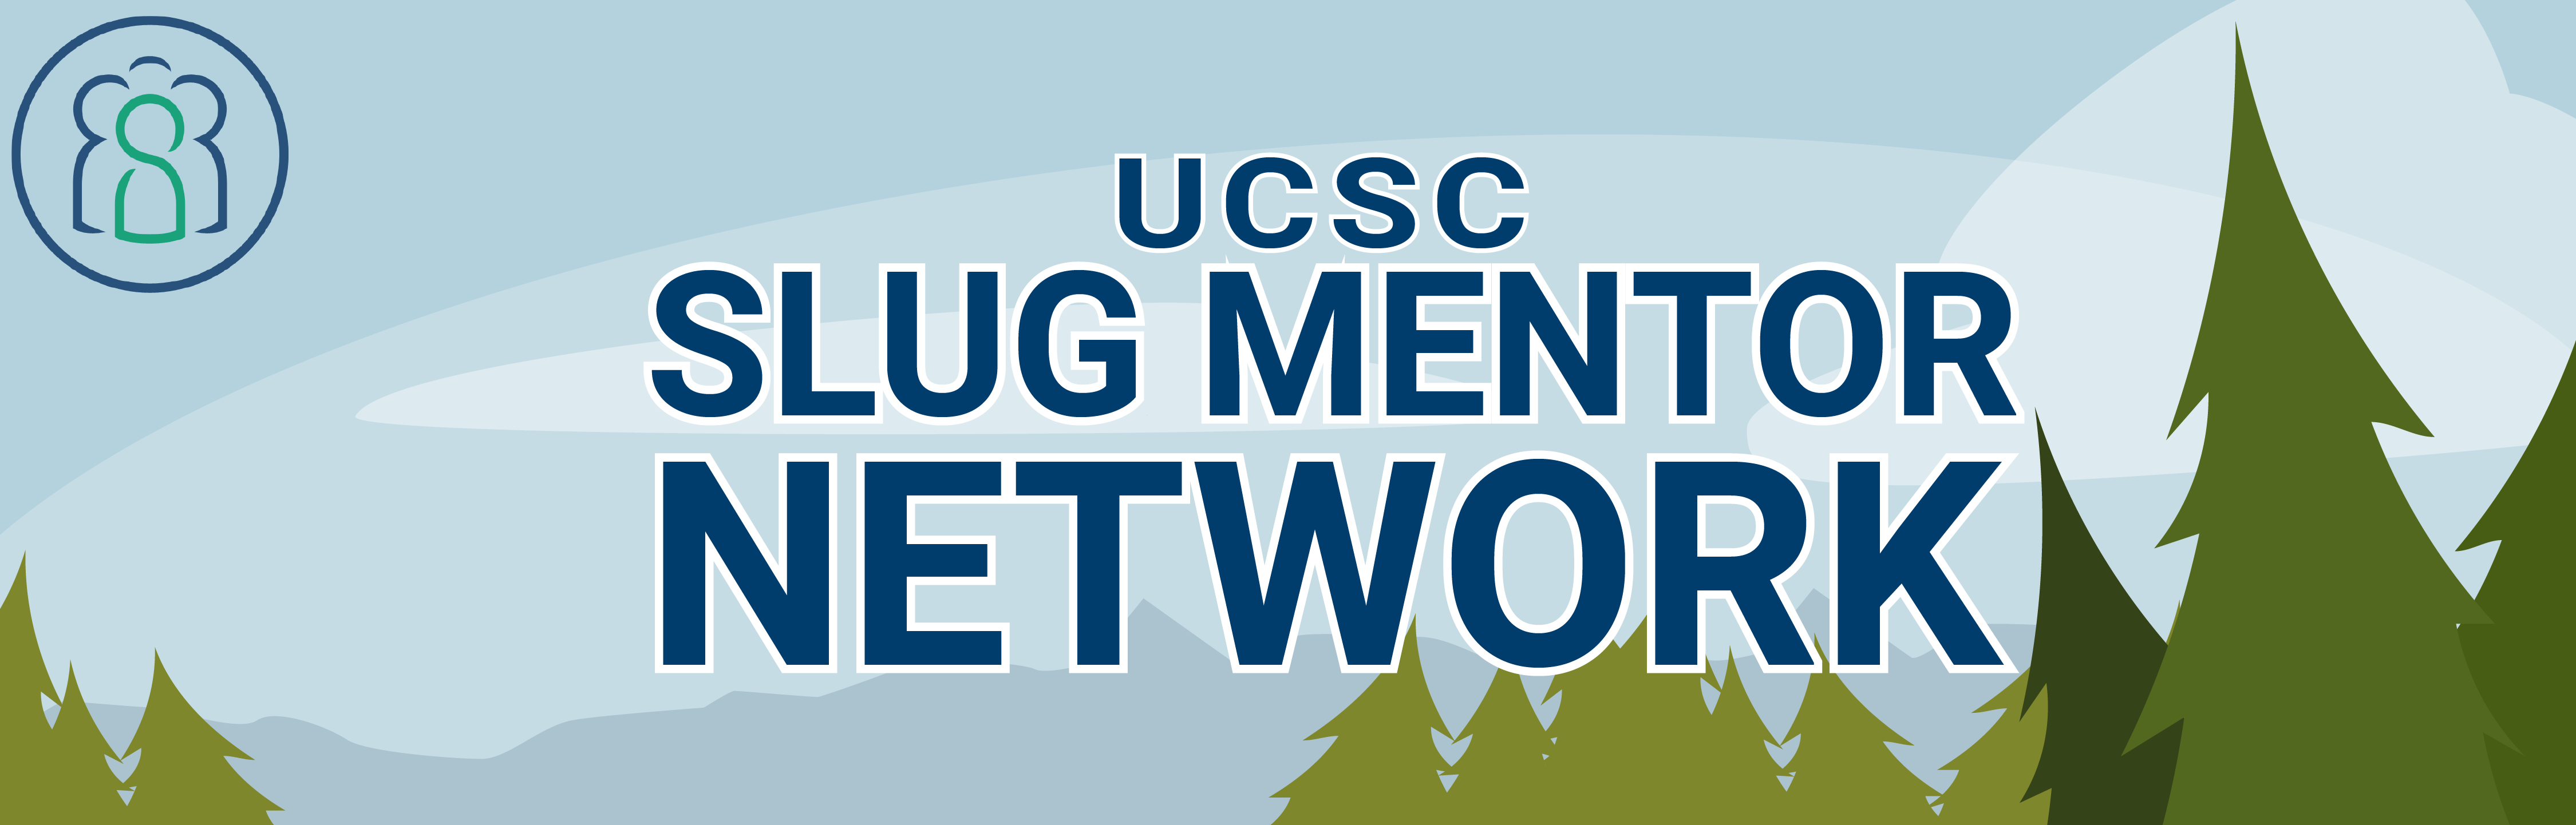 UCSC Slug Mentor Network